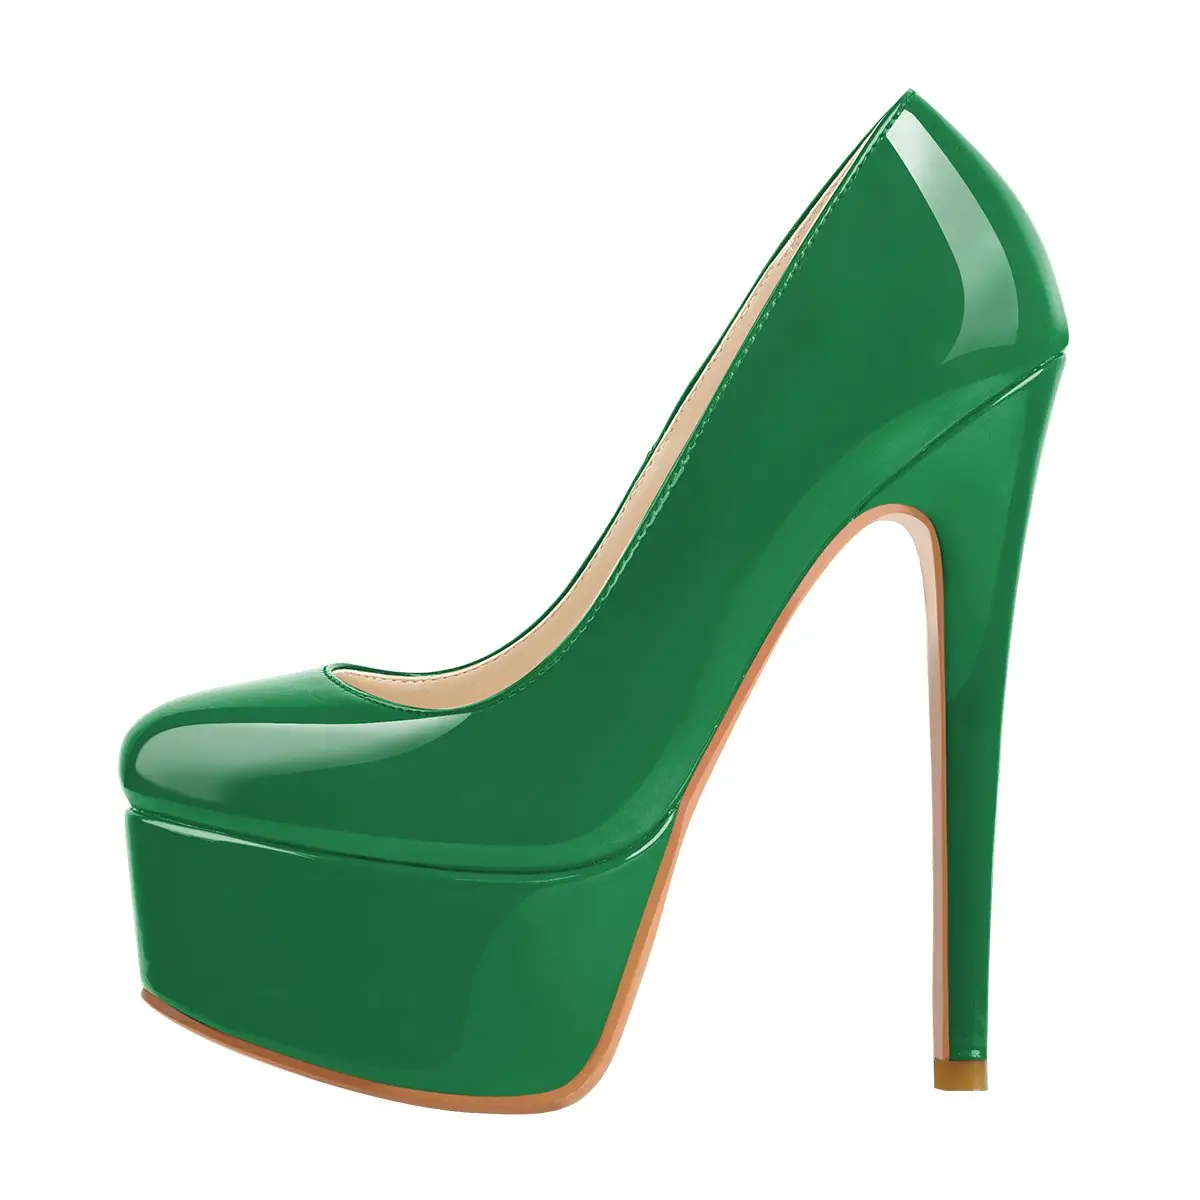 high heels shoes for women dark green patent leather round toe platform stiletto high heels pump ladies shoes